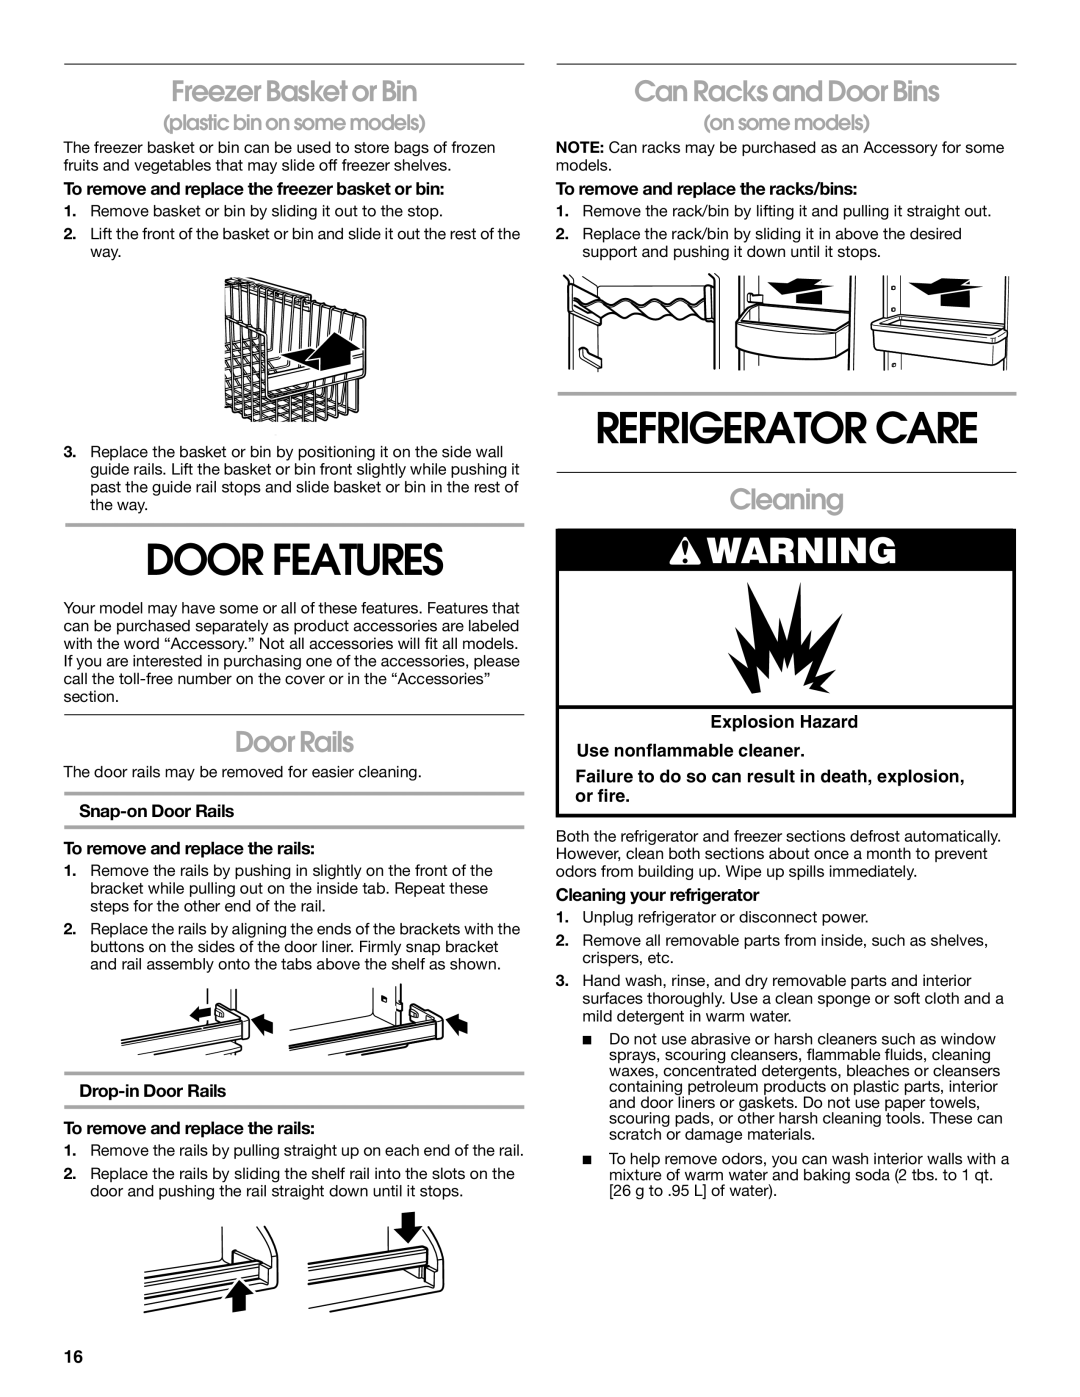 Whirlpool TS25AFXKQ00 manual Refrigerator Care, Door Features, Freezer Basket or Bin, Can Racks and Door Bins, Cleaning 